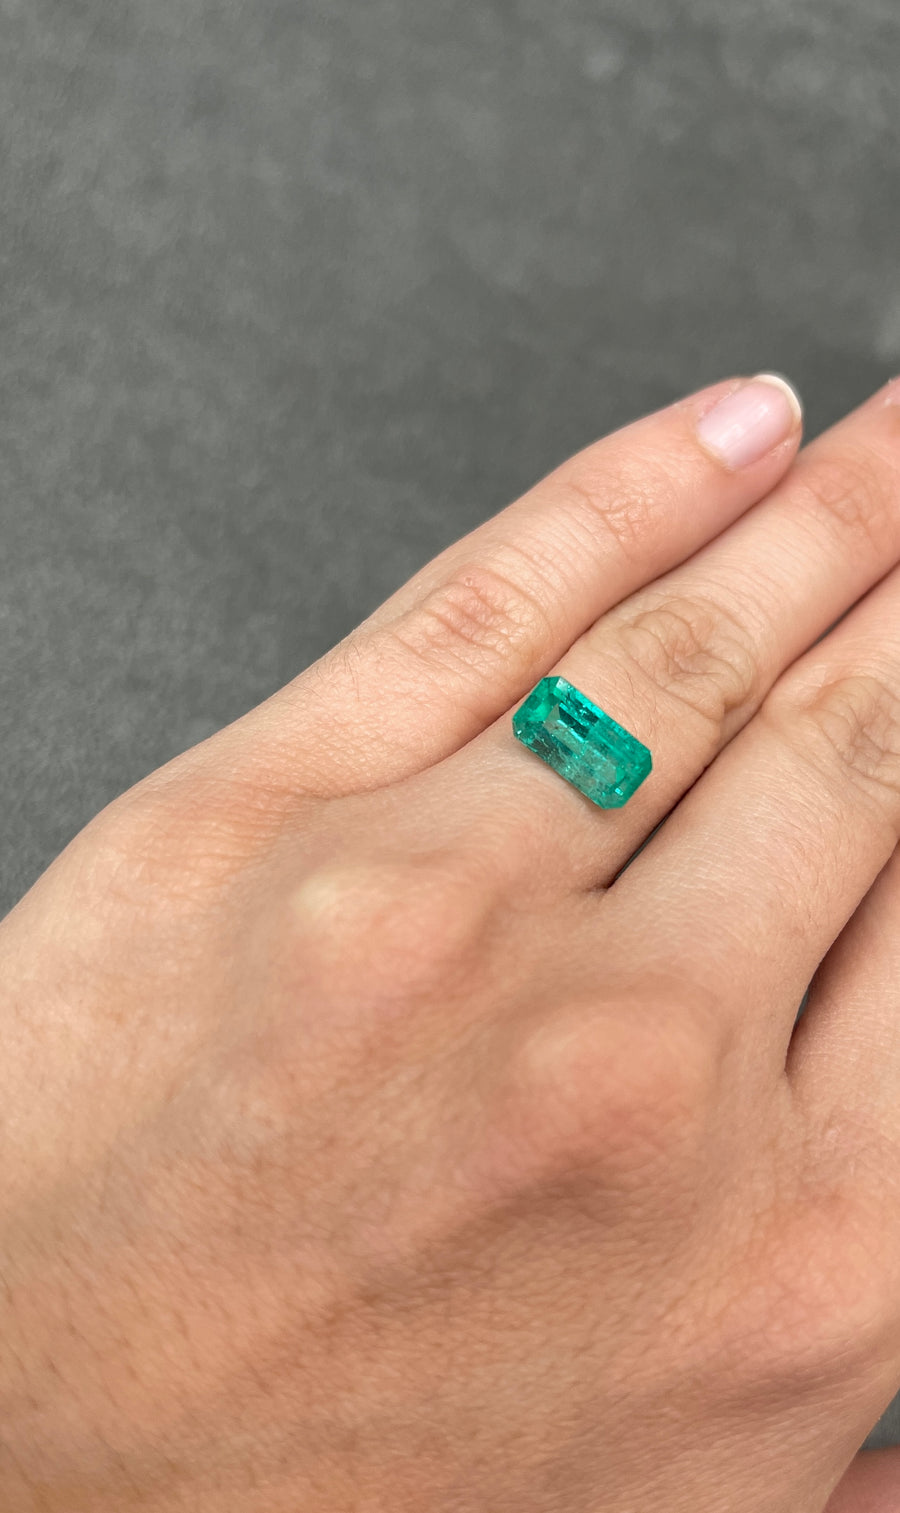 3.58 Carat Loose Colombian Emerald - Exquisite Elongated Emerald Cut in Bluish-Green